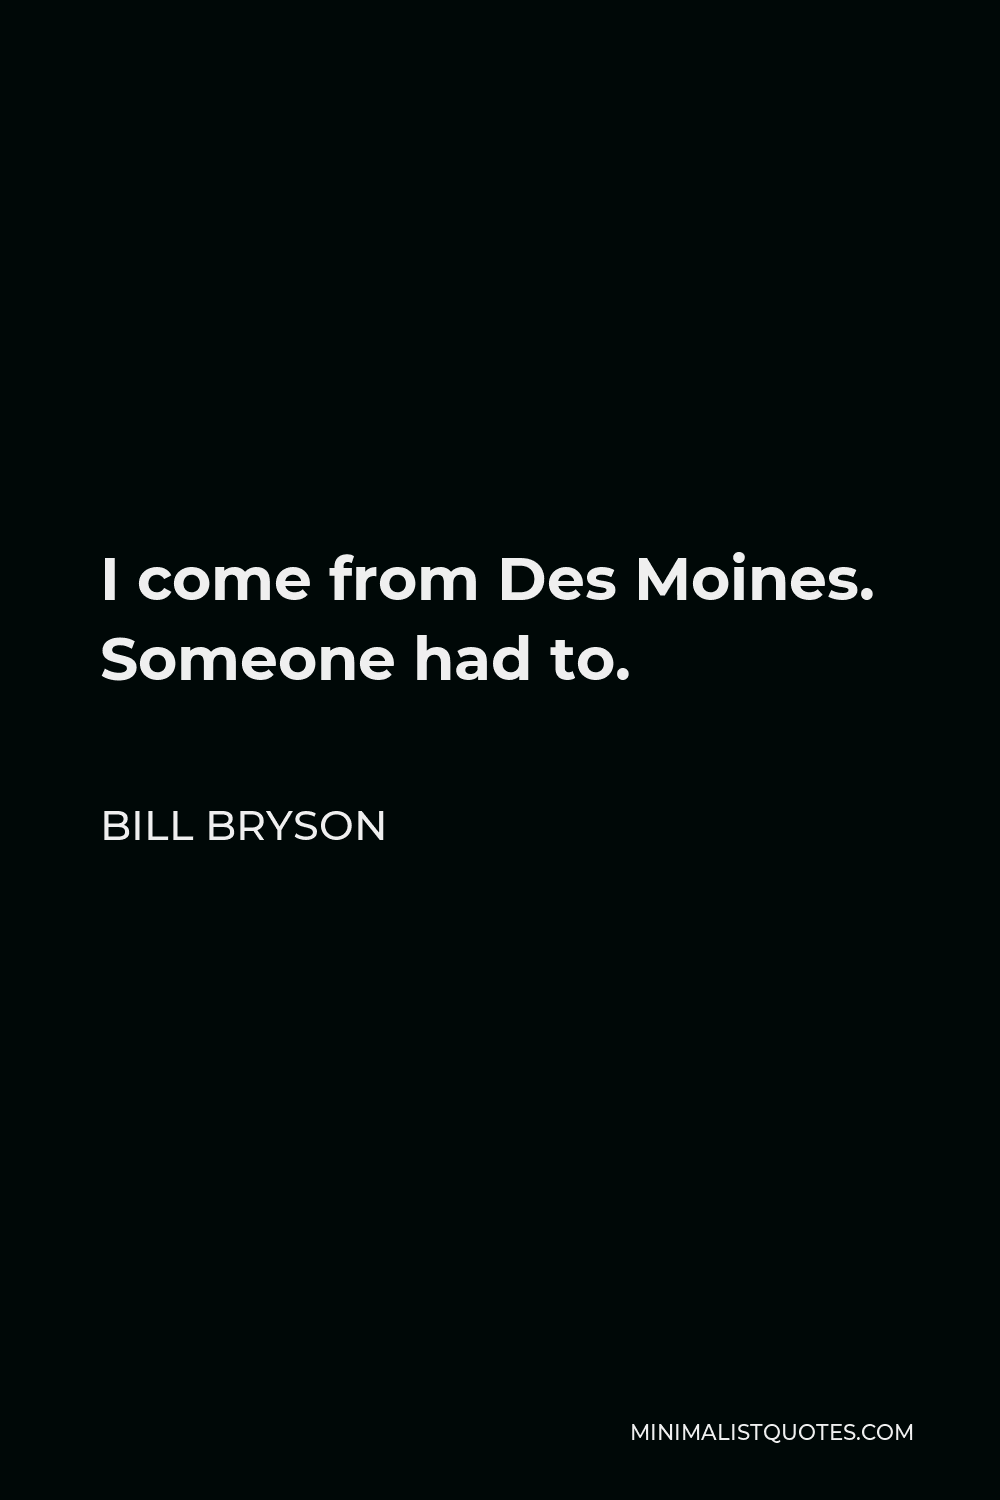 Bill Bryson Quote - I come from Des Moines. Someone had to.